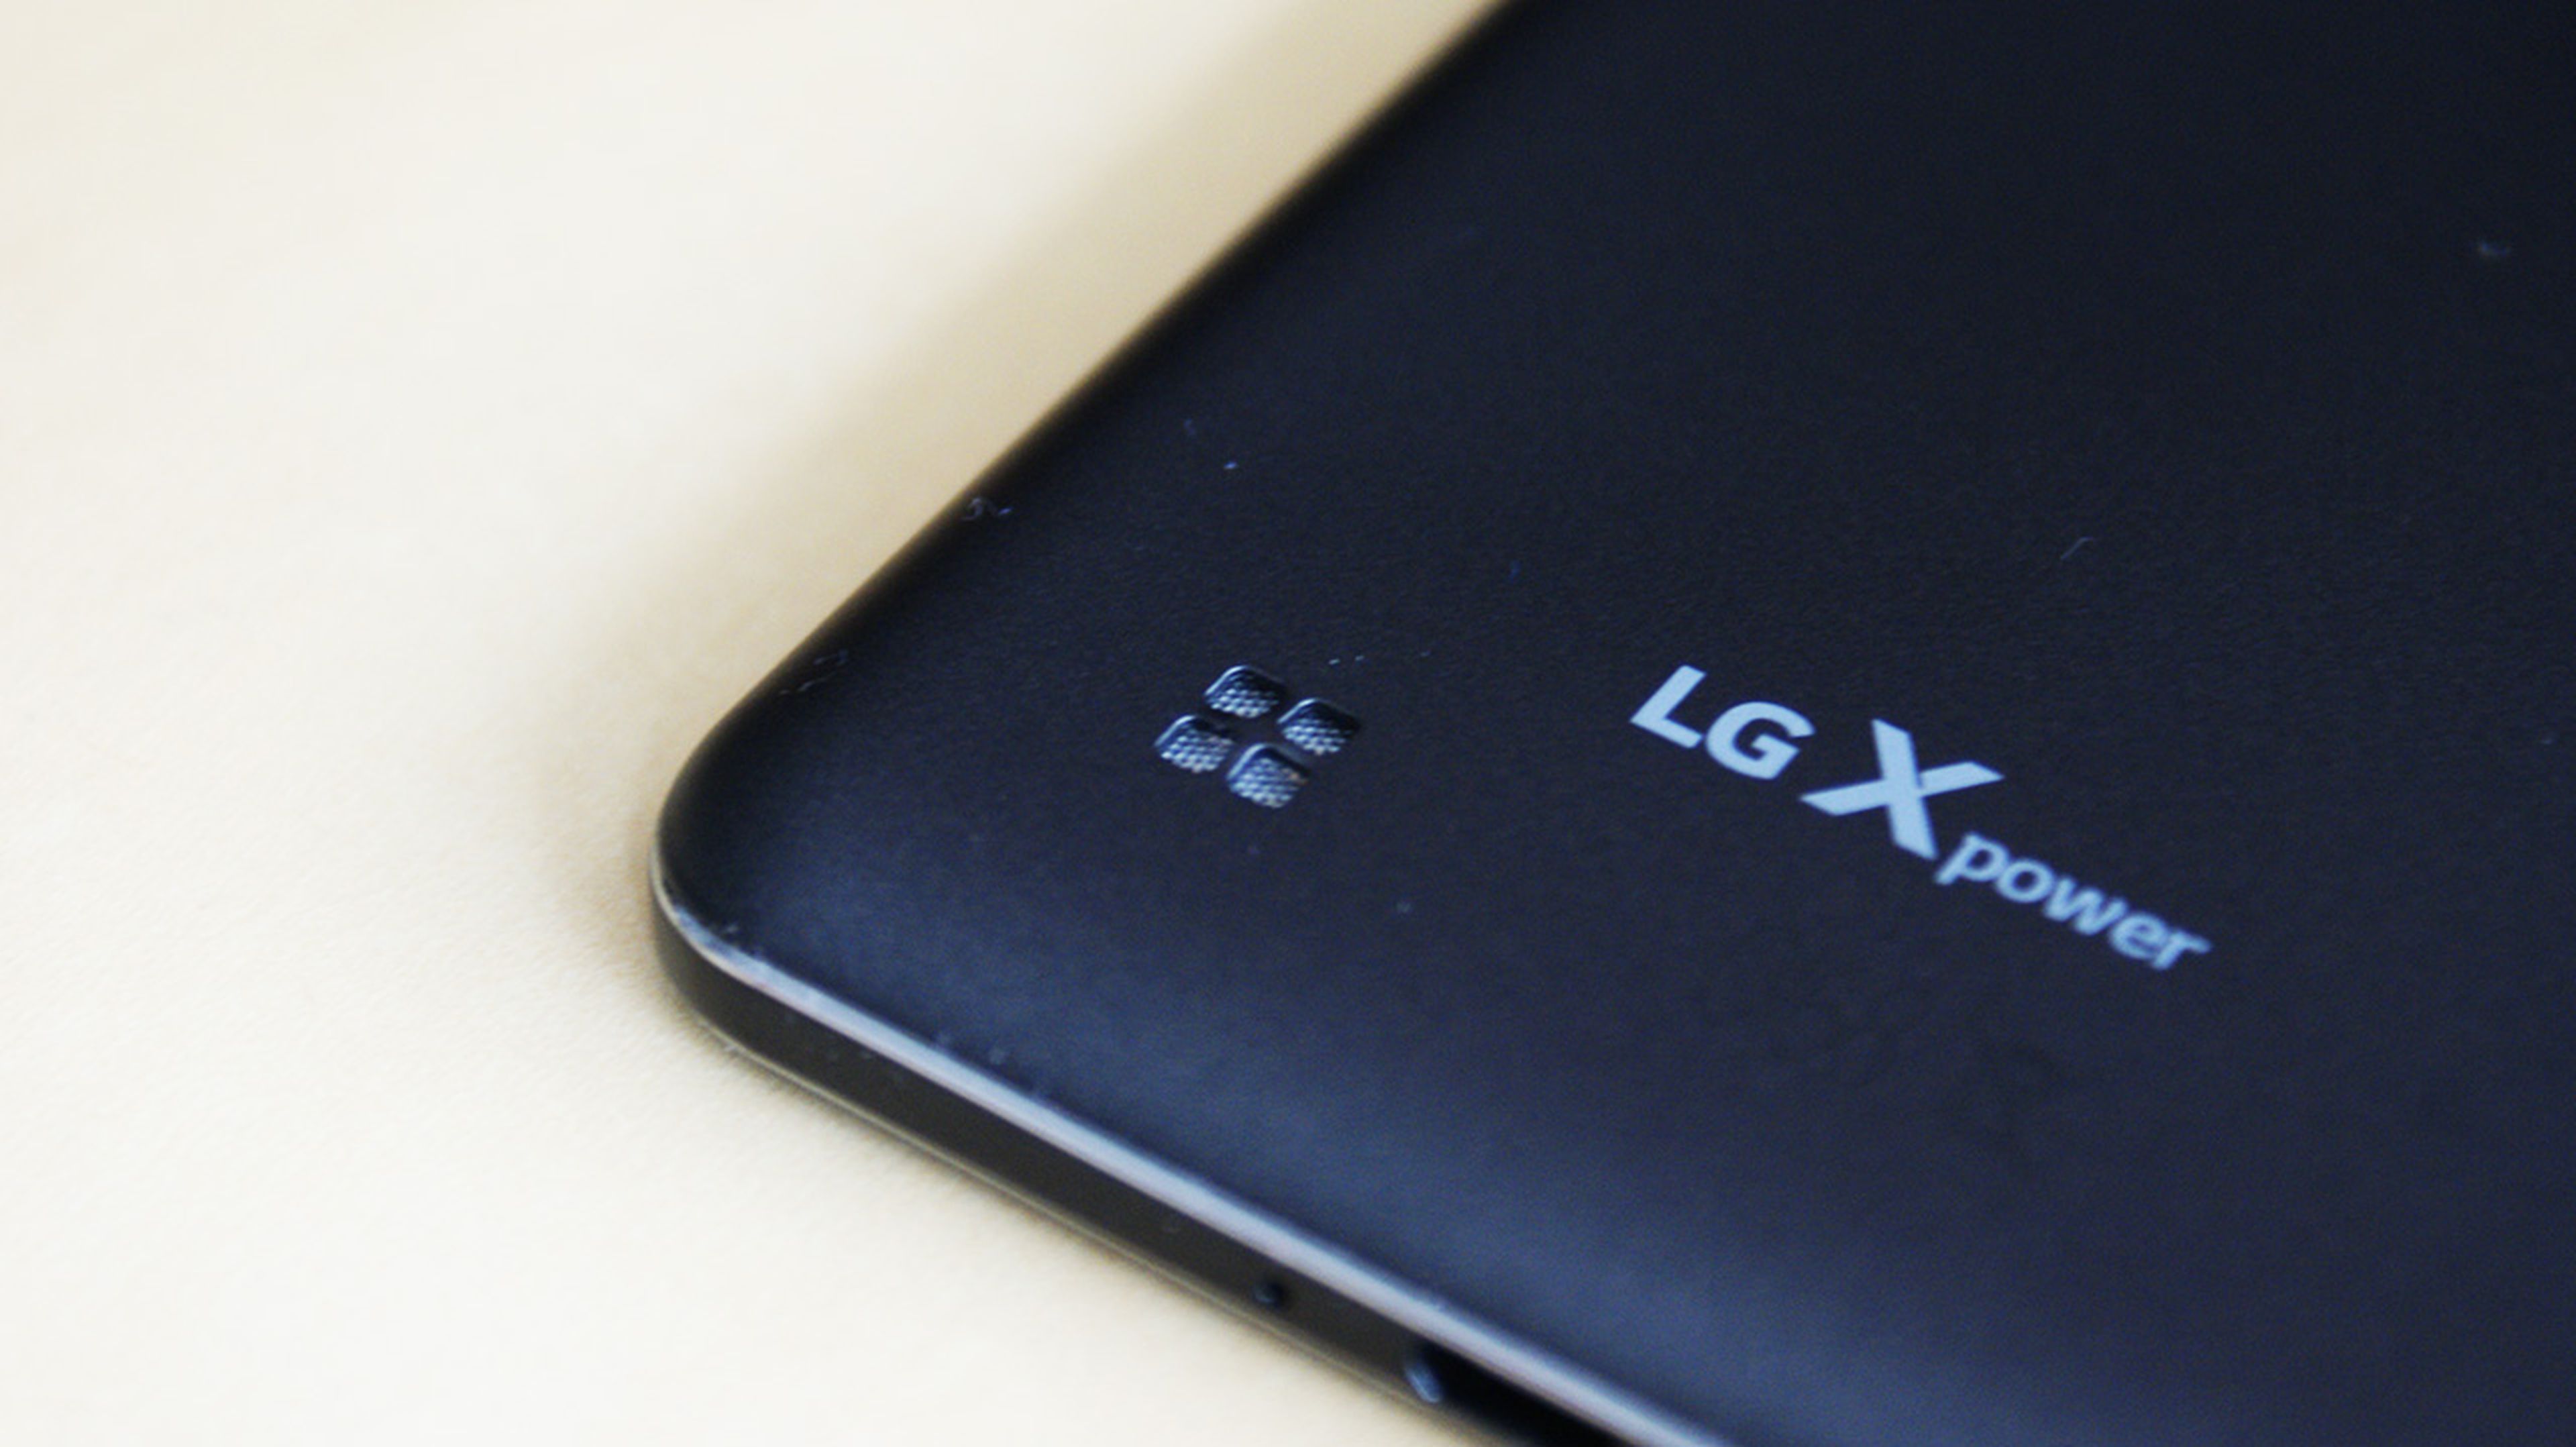 detalle del altavoz del LG X power